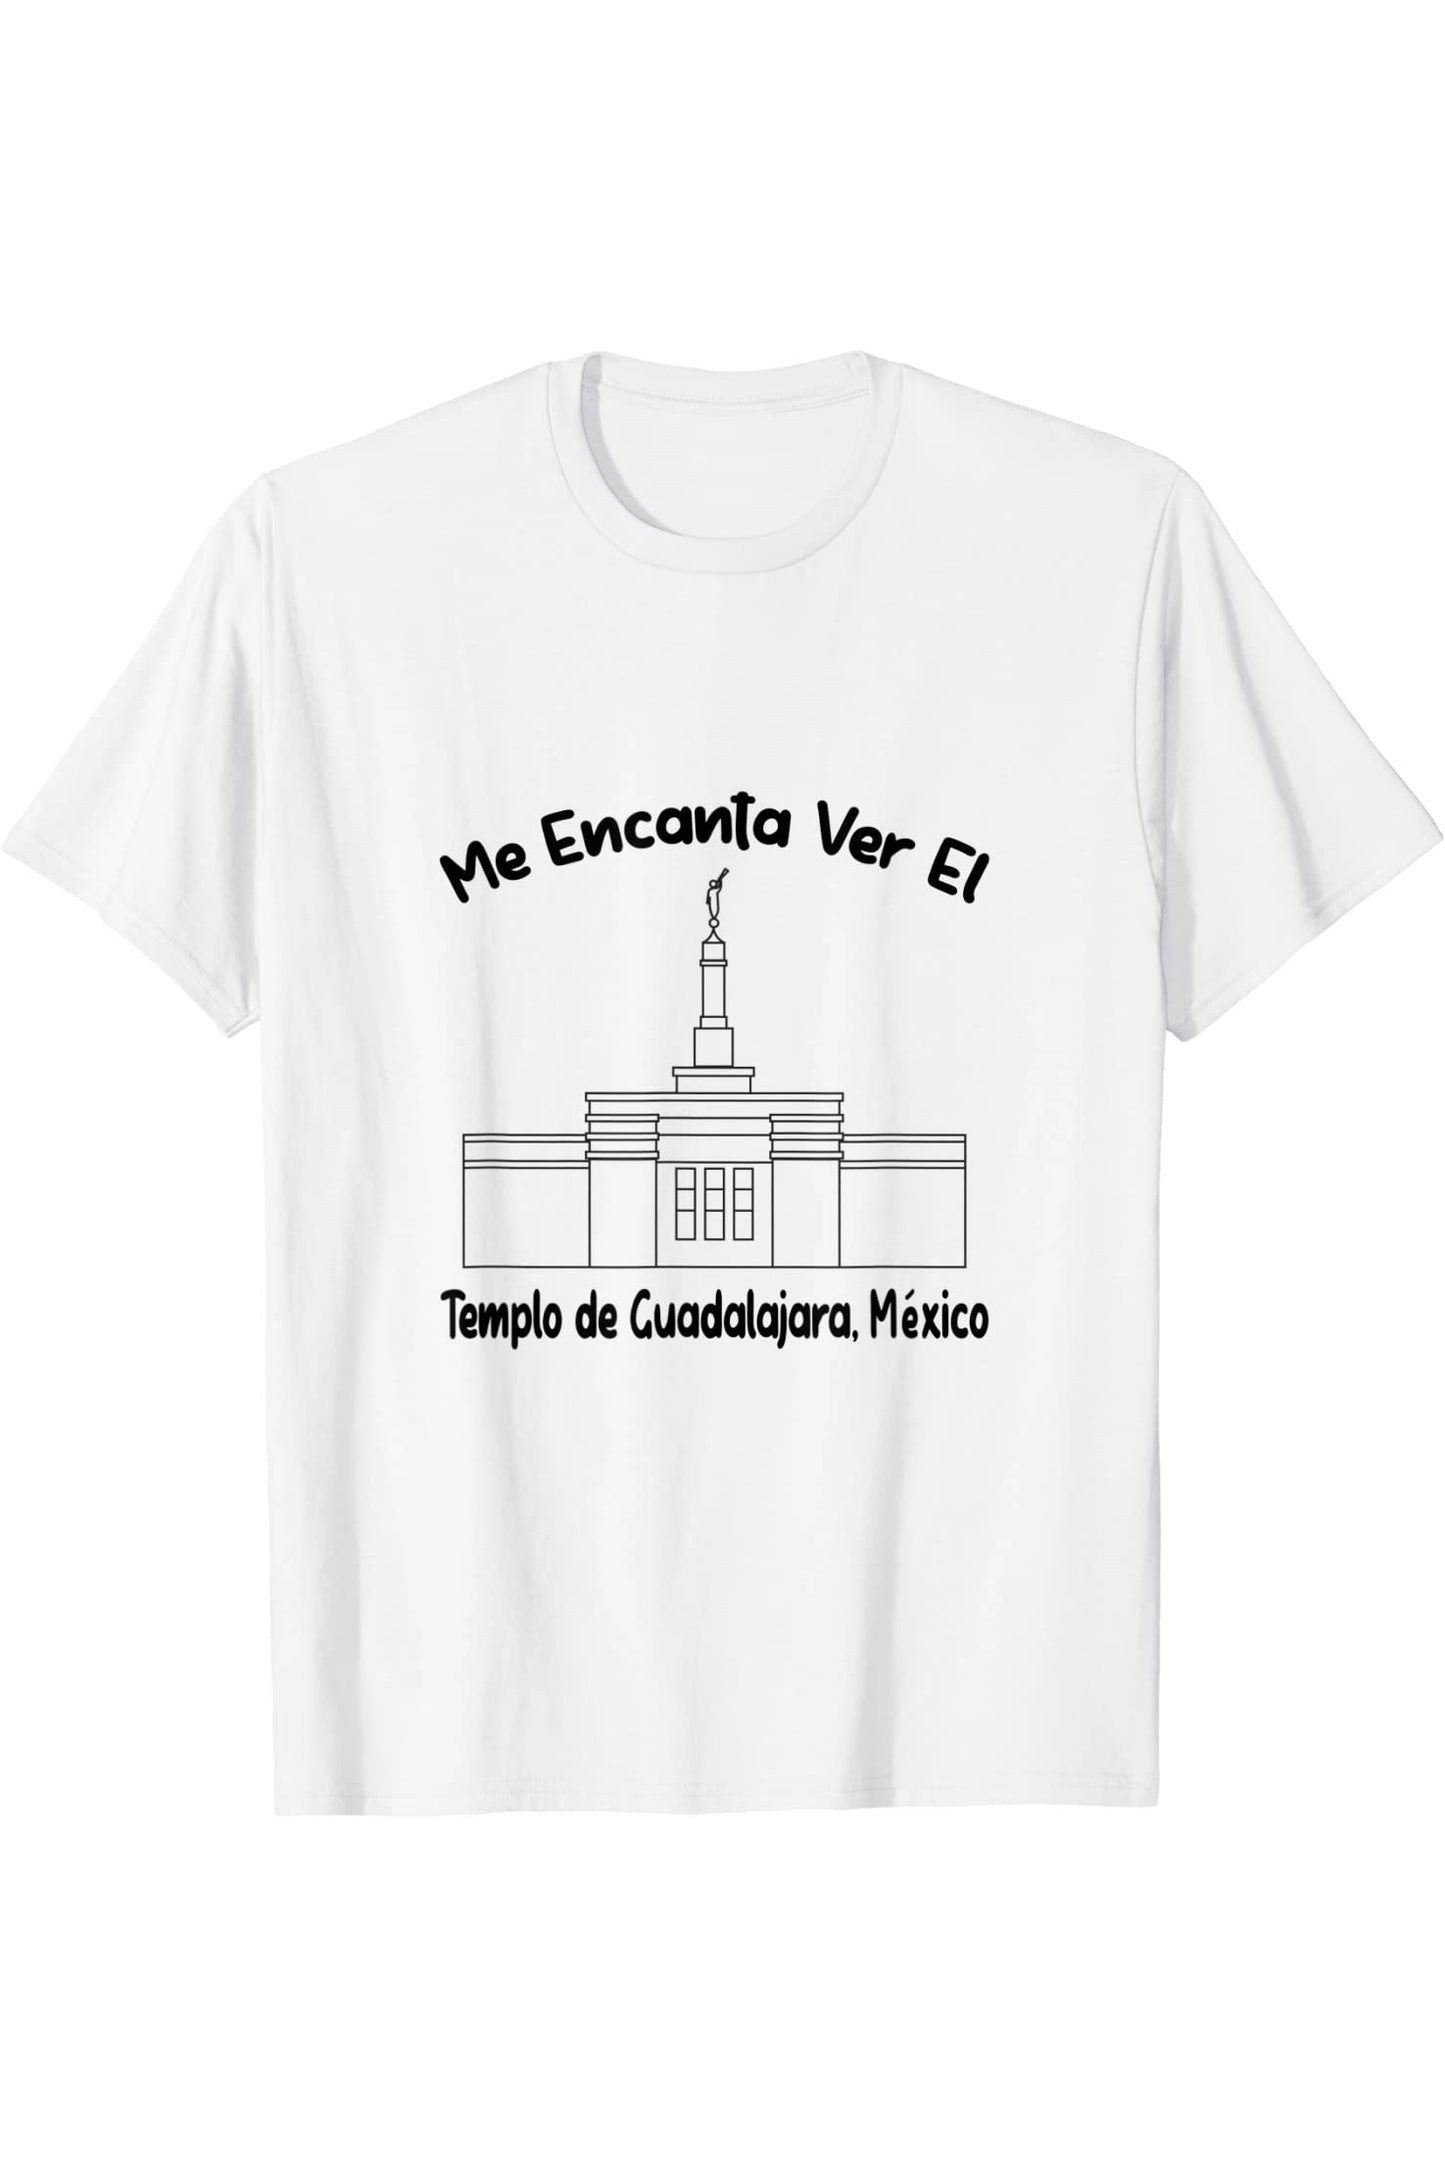 Guadalajara Mexico Temple T-Shirt - Primary Style (Spanish) US